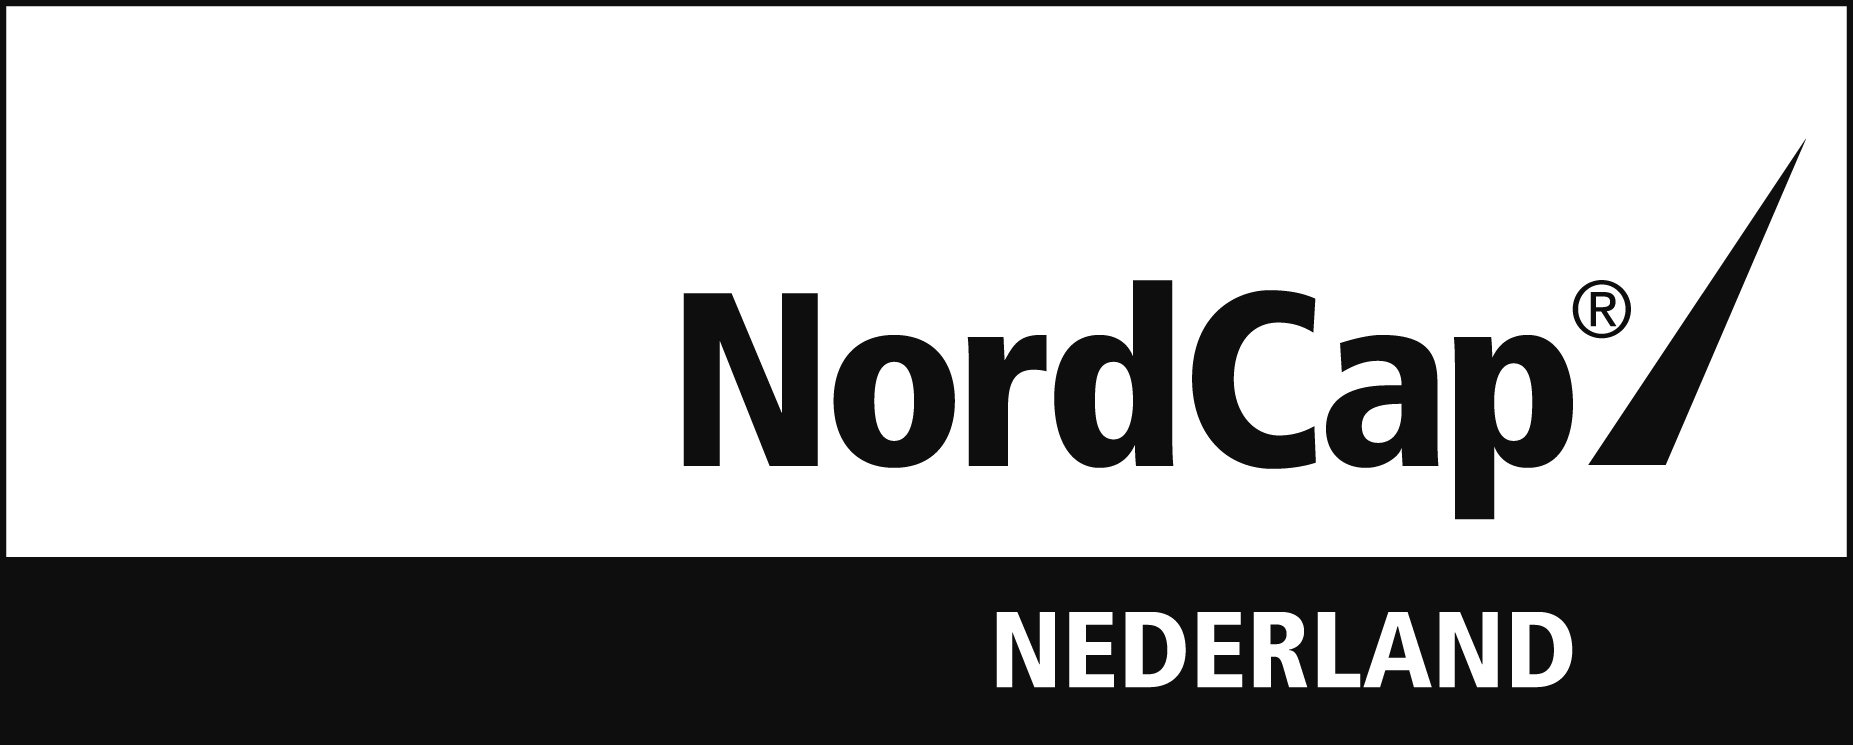 Nordcap Nederland logo